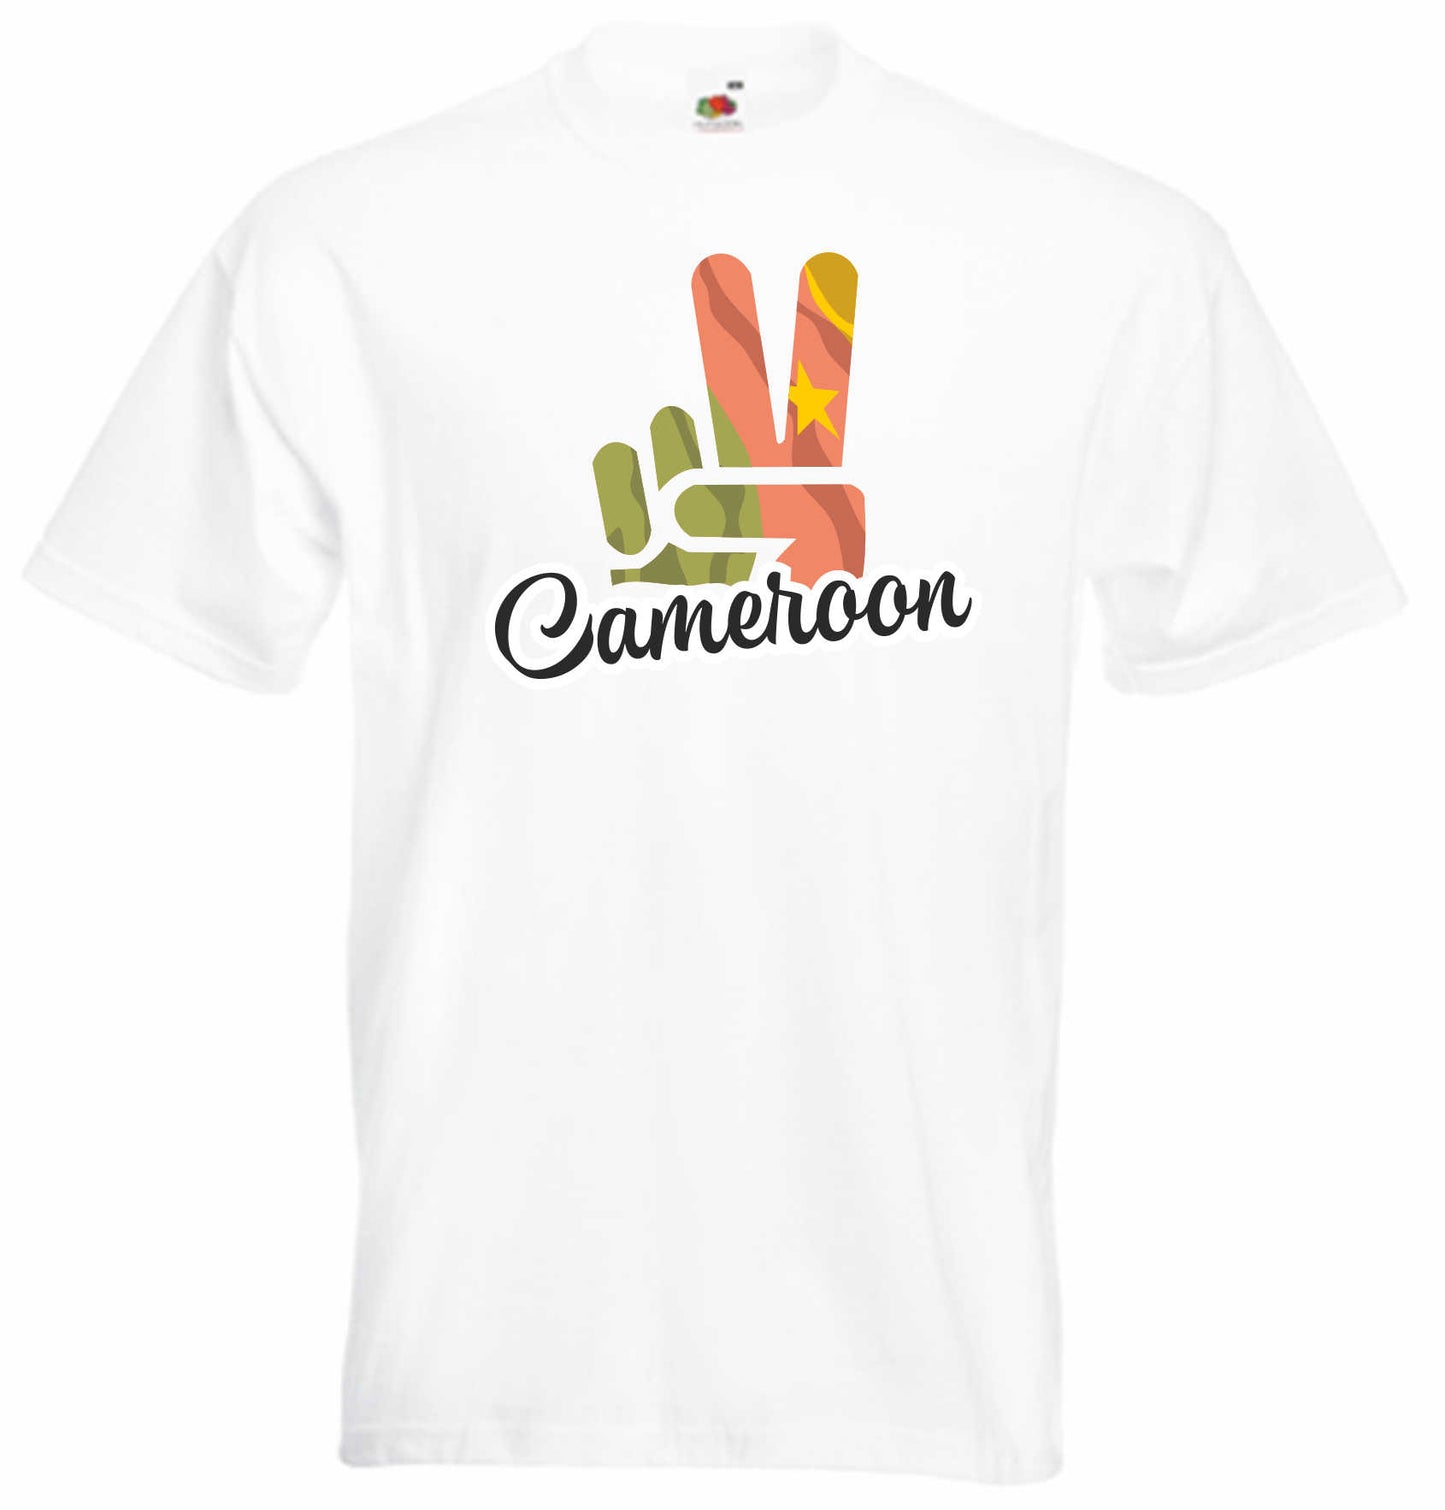 T-Shirt Herren - Victory - Flagge / Fahne - Cameroon - Sieg